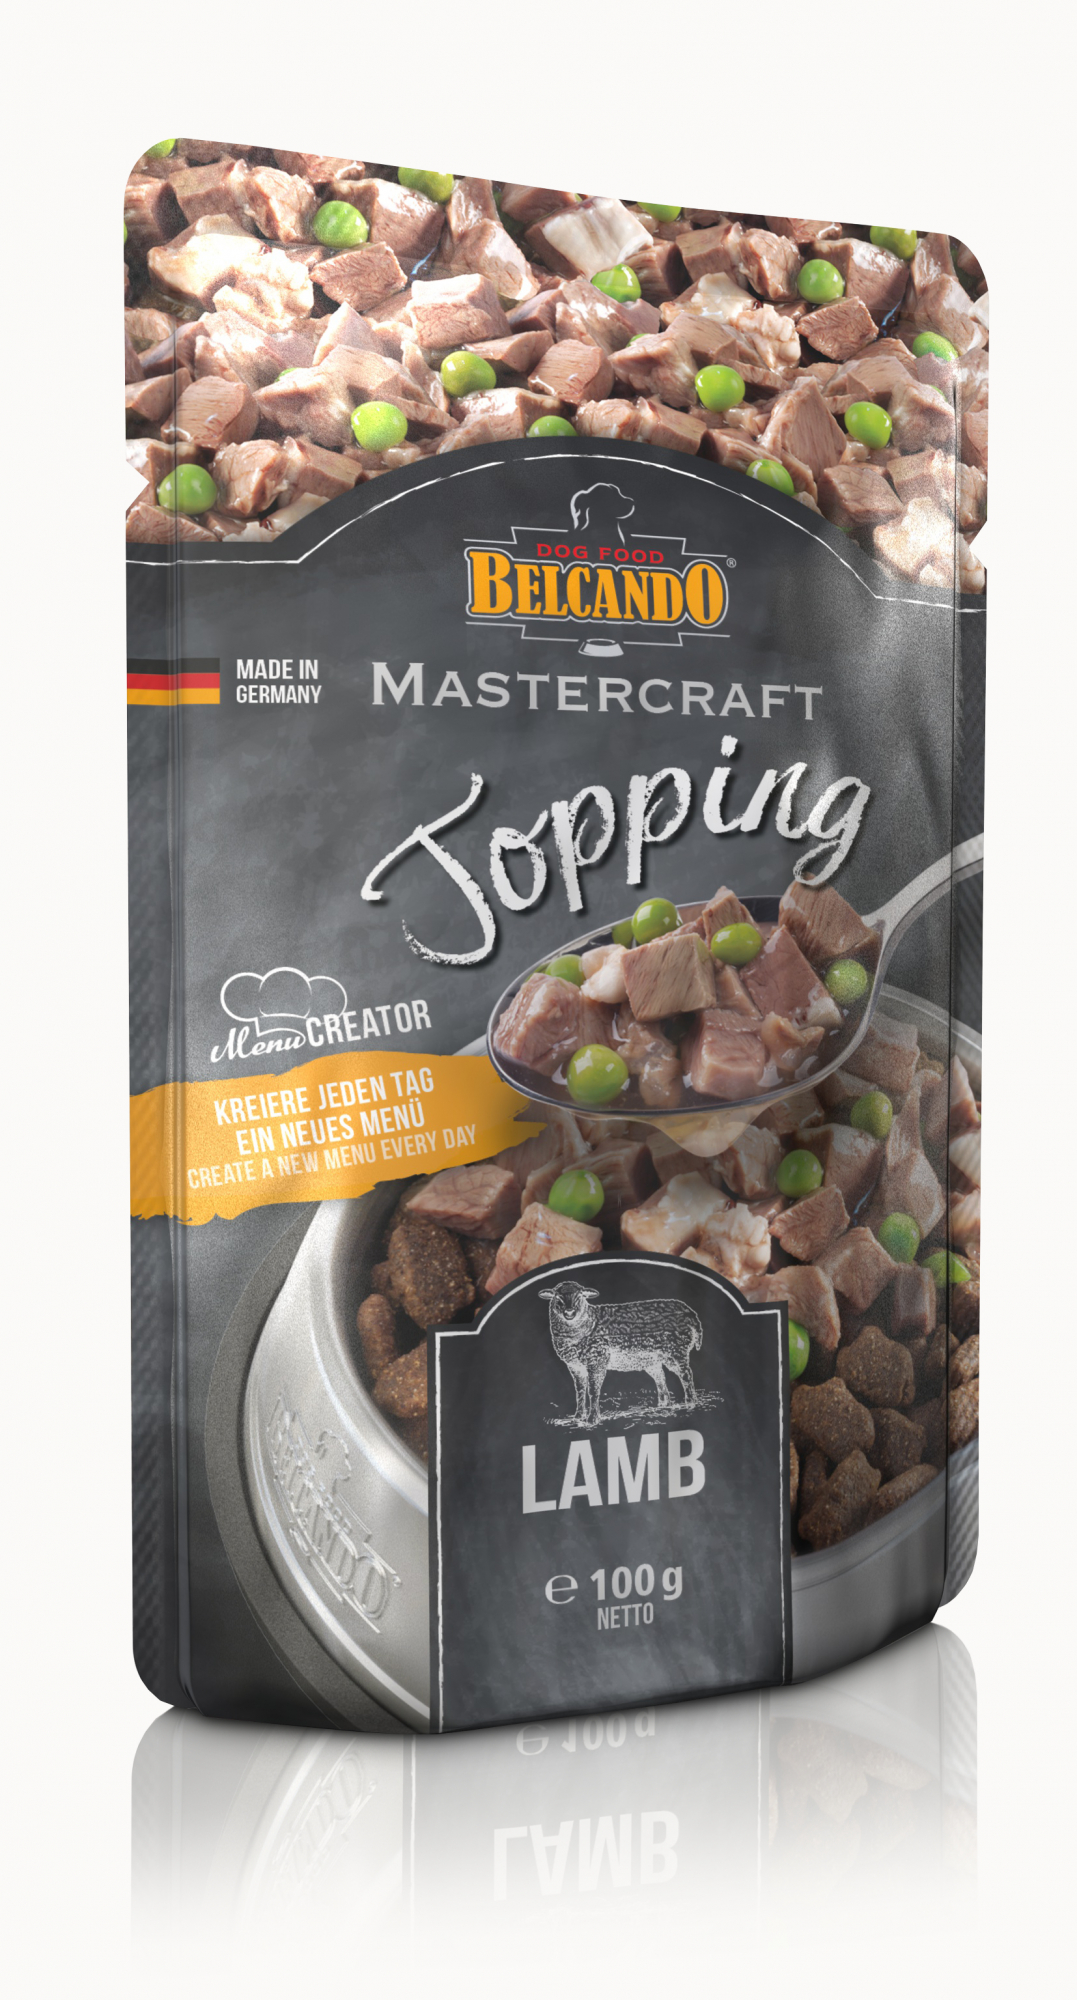 BELCANDO Mastercraft Topping a all'agnello per cani